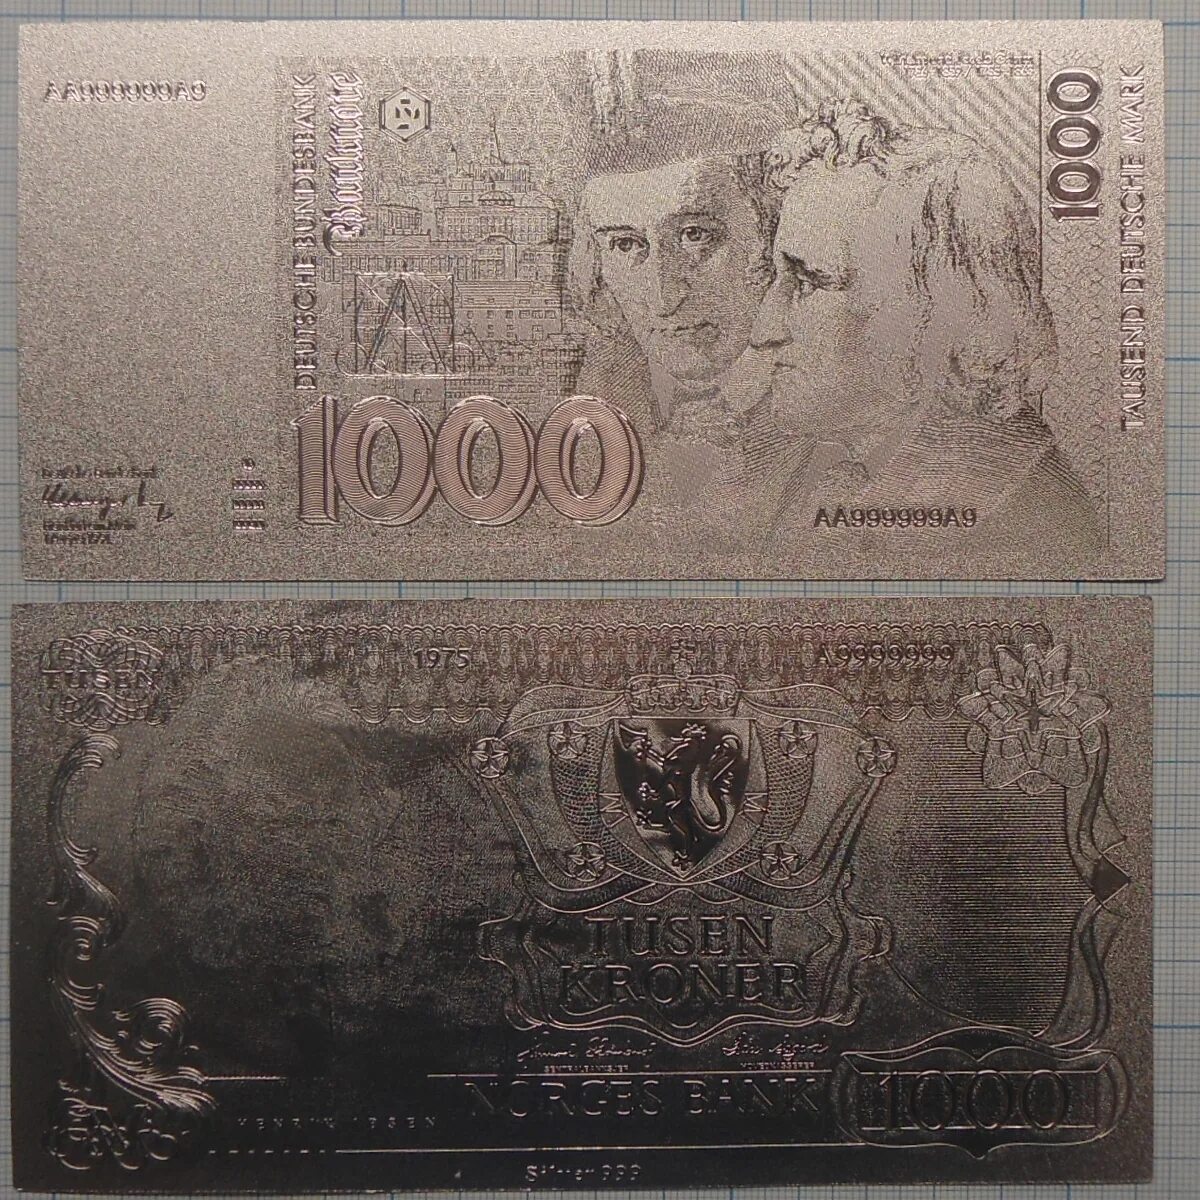 1000 крон. 1000 Крон 2003. 1000 Крон Норвегии. 1000 Марок ФРГ. 1000 Крон 2019, Норвегия..